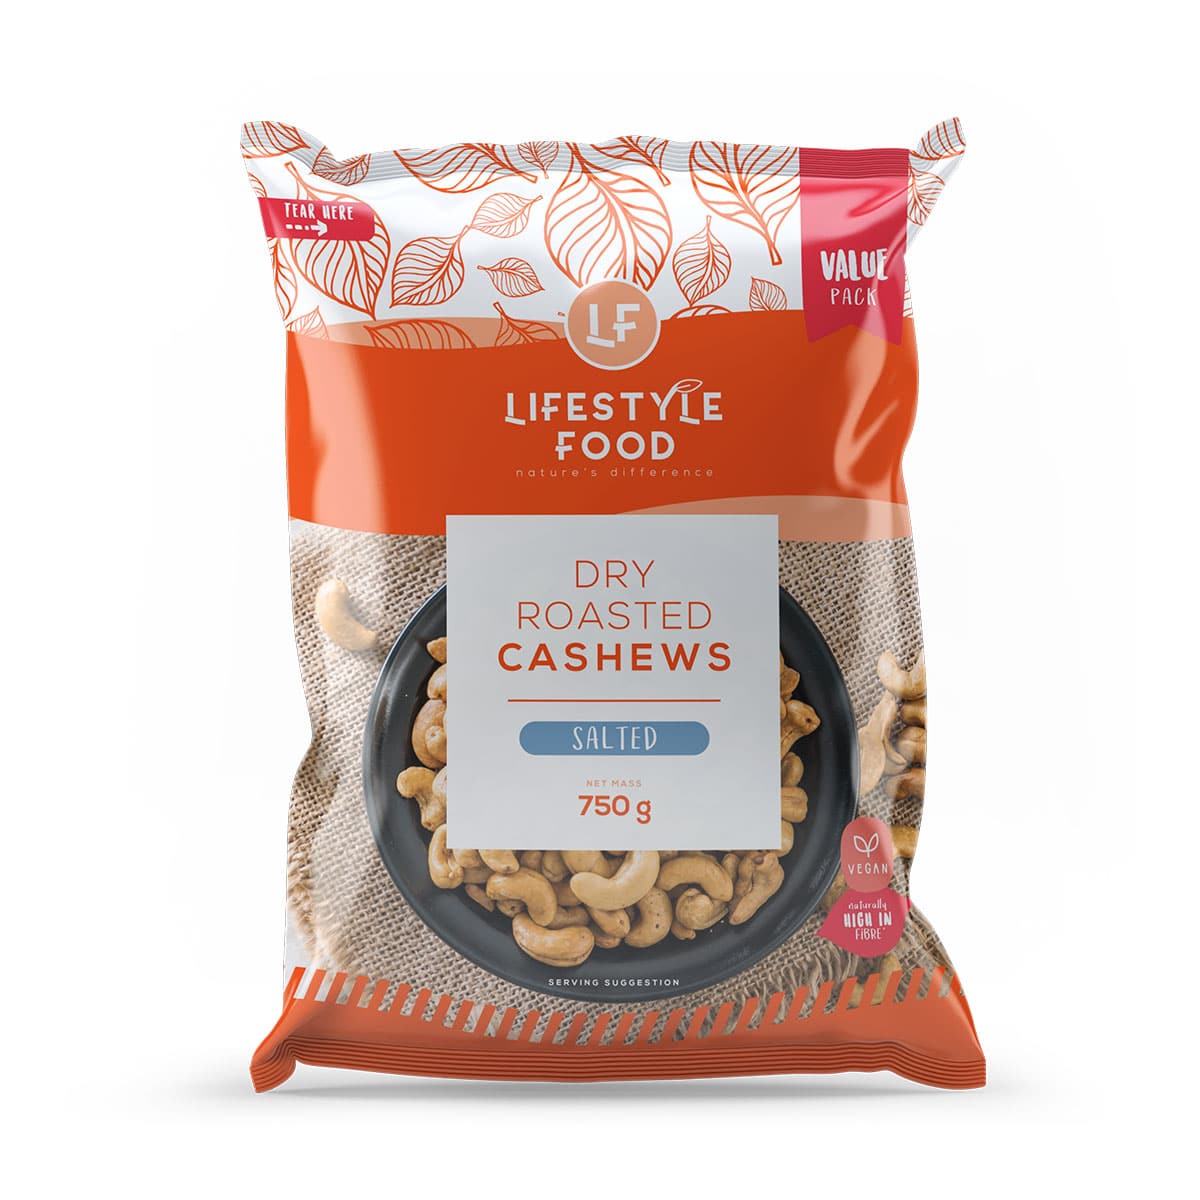 Lifestyle Food Dry Roasted Cashews Value Pack - 750g